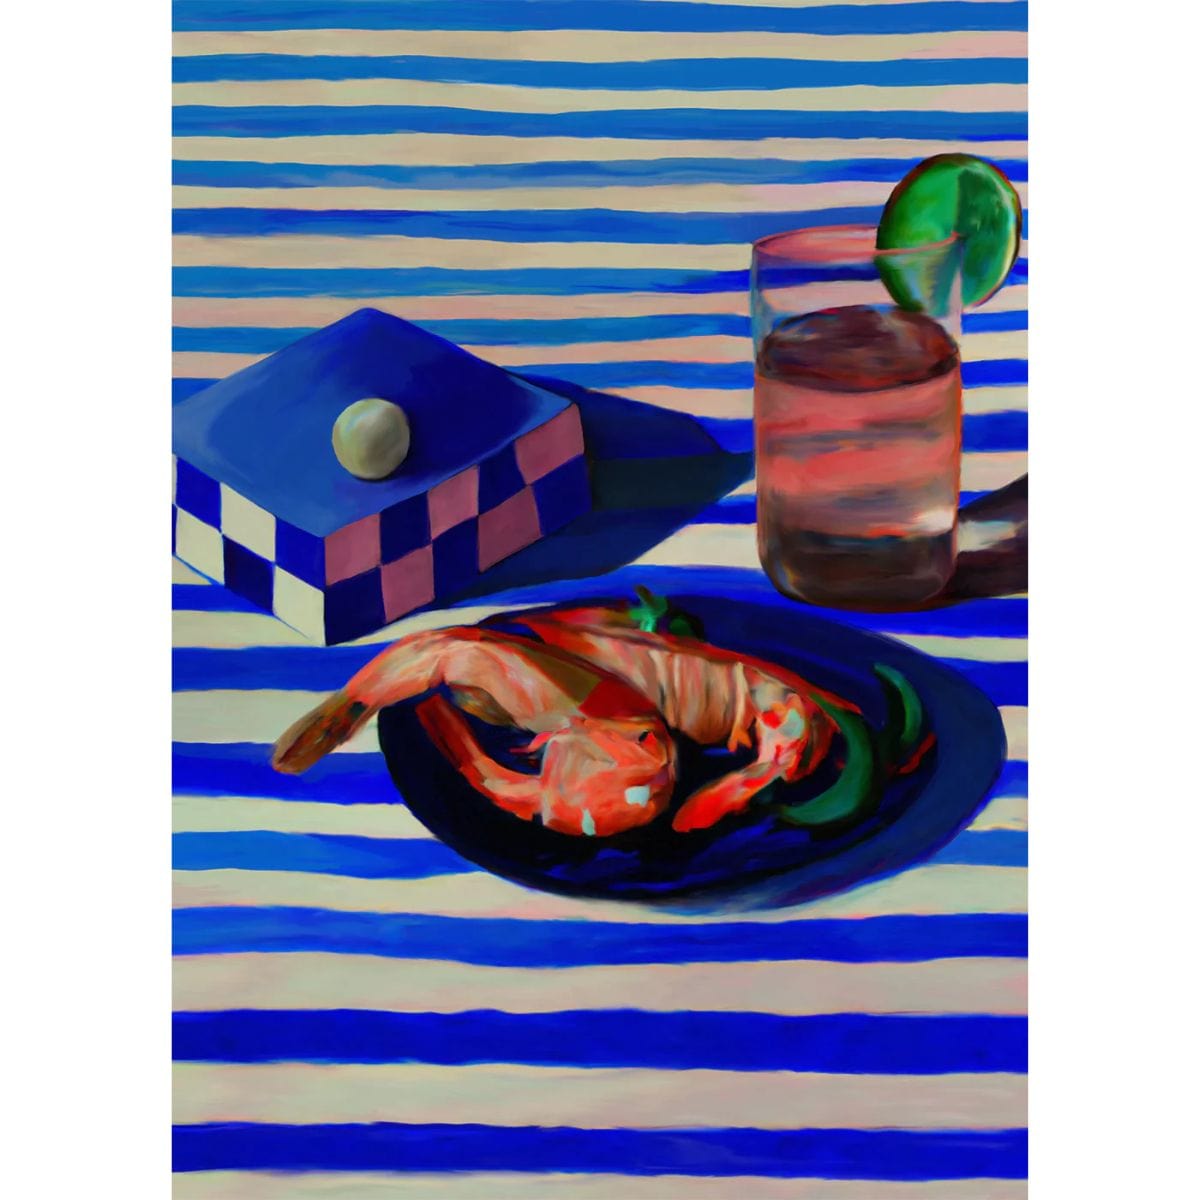 PAPER COLLECTIVE Poster Πόστερ, Shrimp & Stripes, 50x70, Μπλε/Πορτοκαλί, Sustainable Paper, PAPER COLLECTIVE